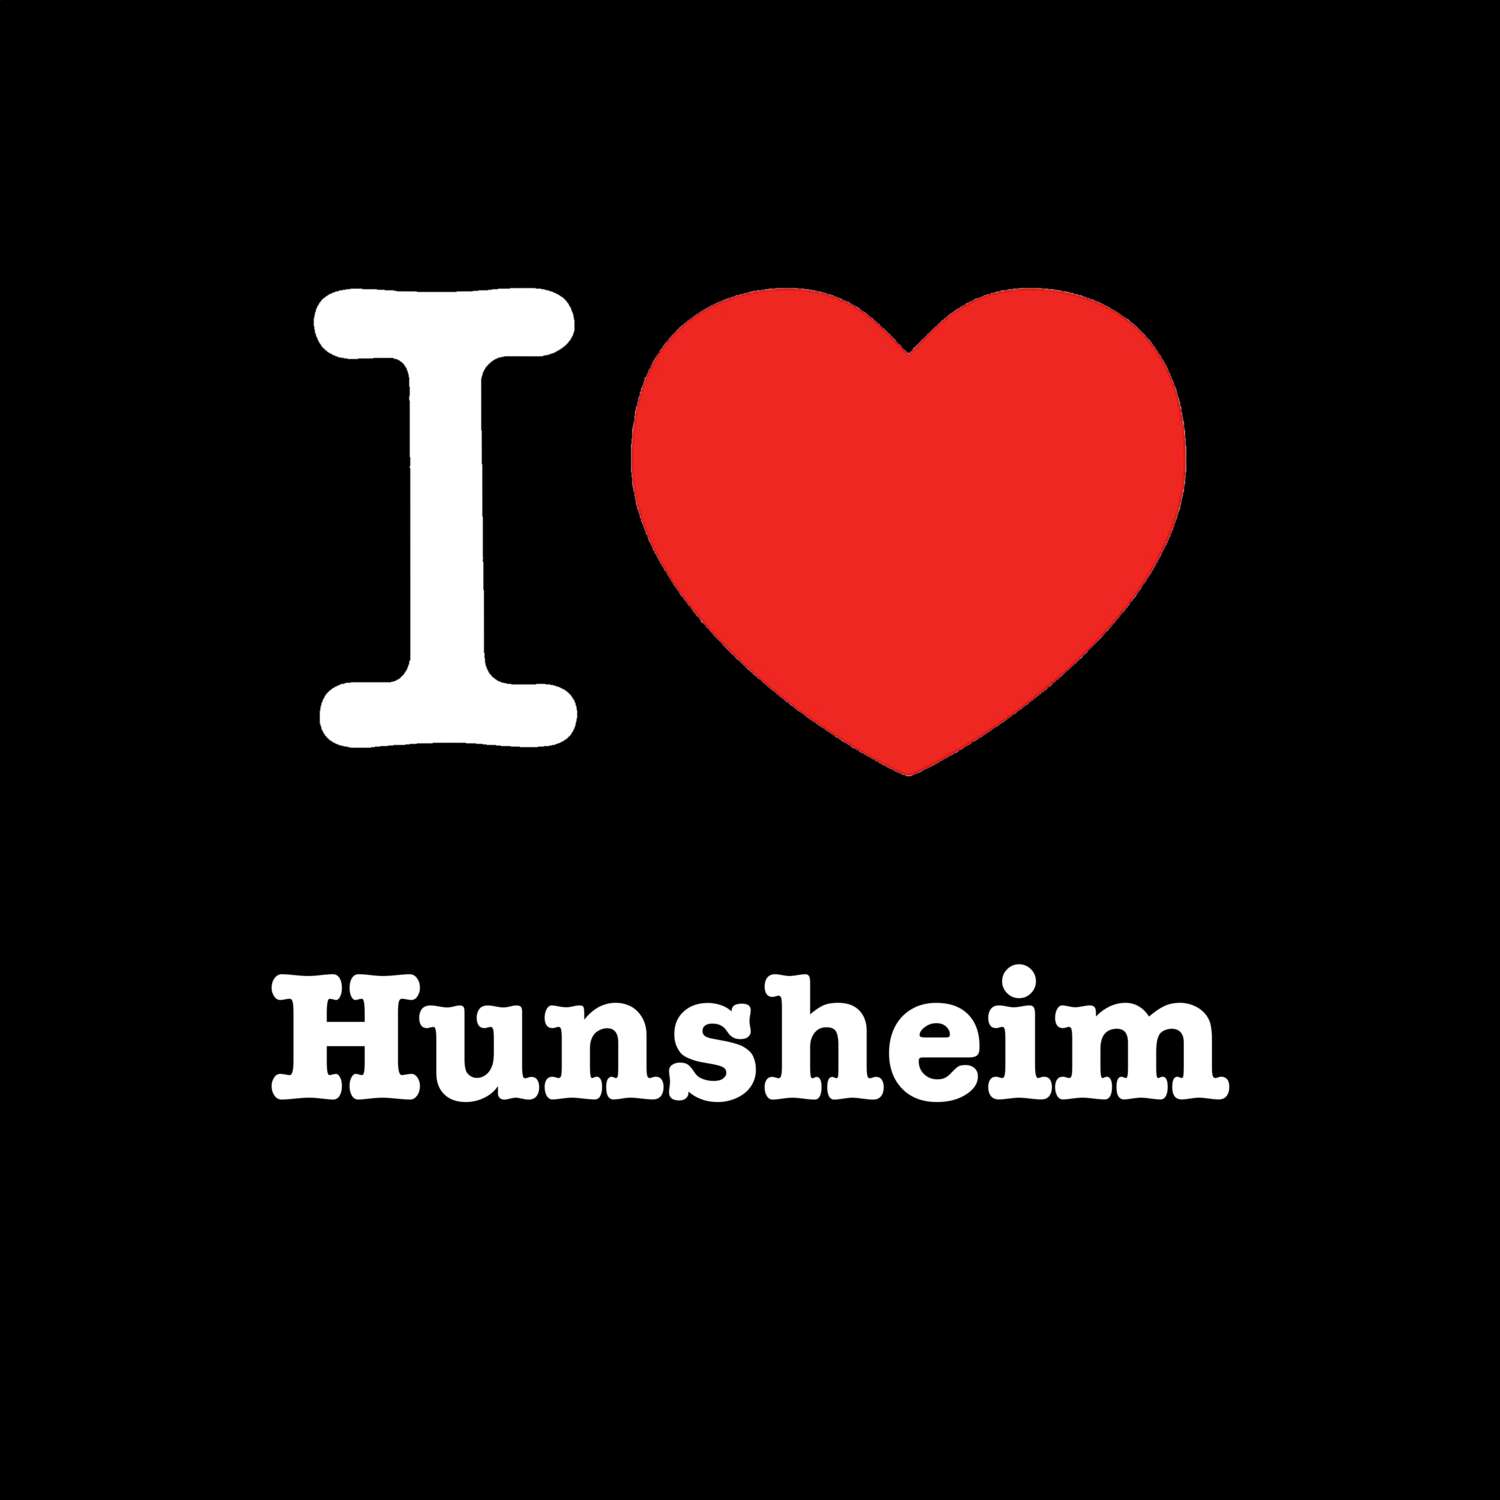 Hunsheim T-Shirt »I love«